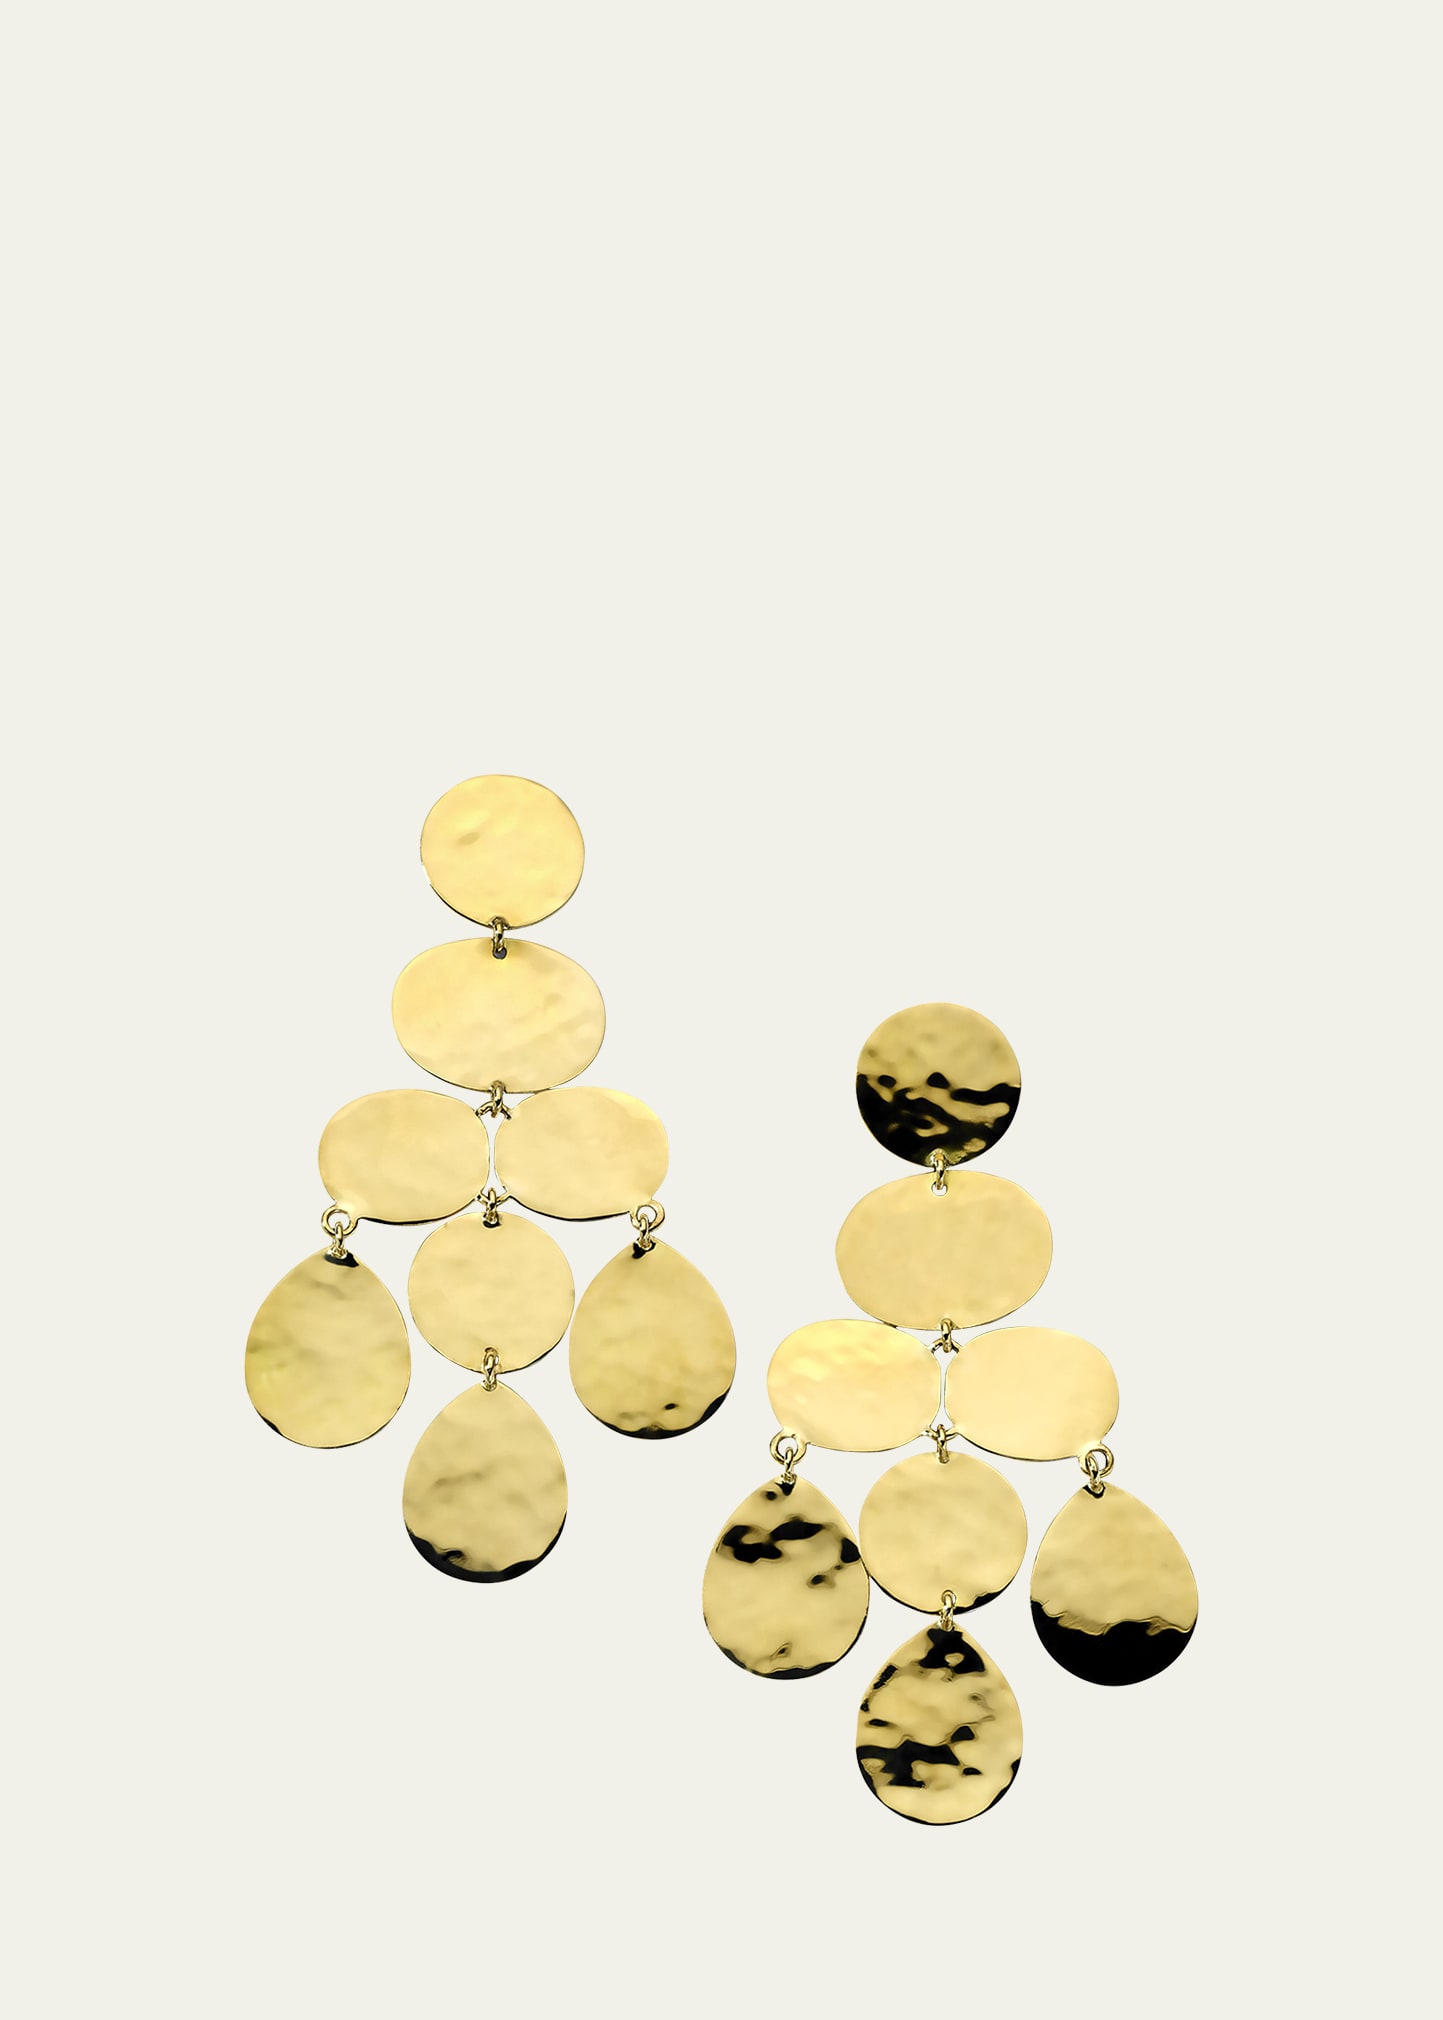 IPPOLITA SMALL CRINKLE CHANDELIER EARRINGS IN 18K GOLD